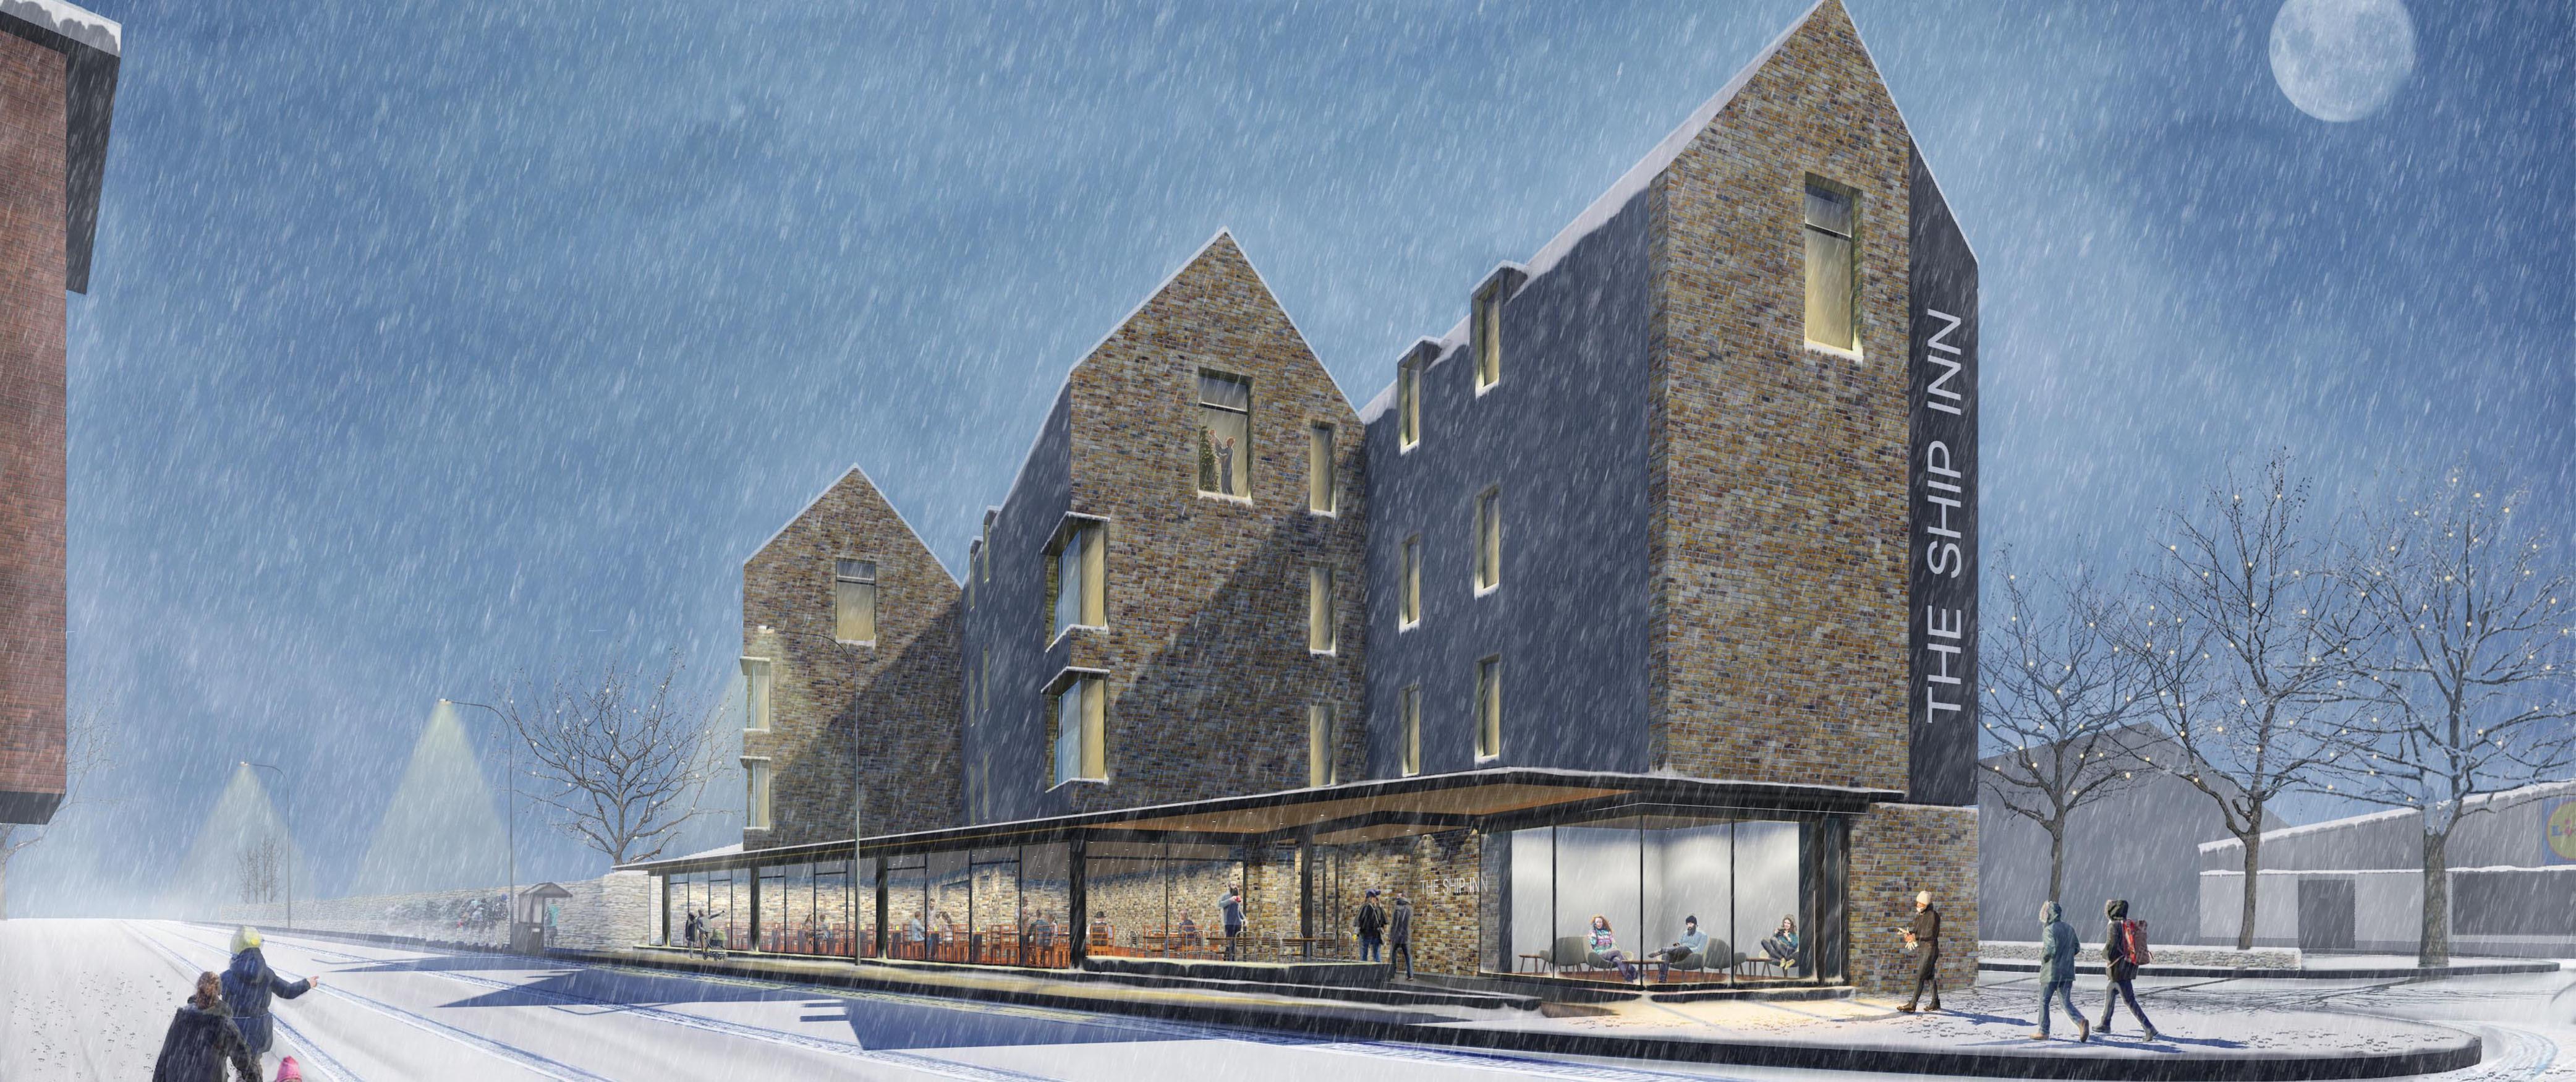 Oberlanders plans comprehensive redevelopment of Musselburgh bar